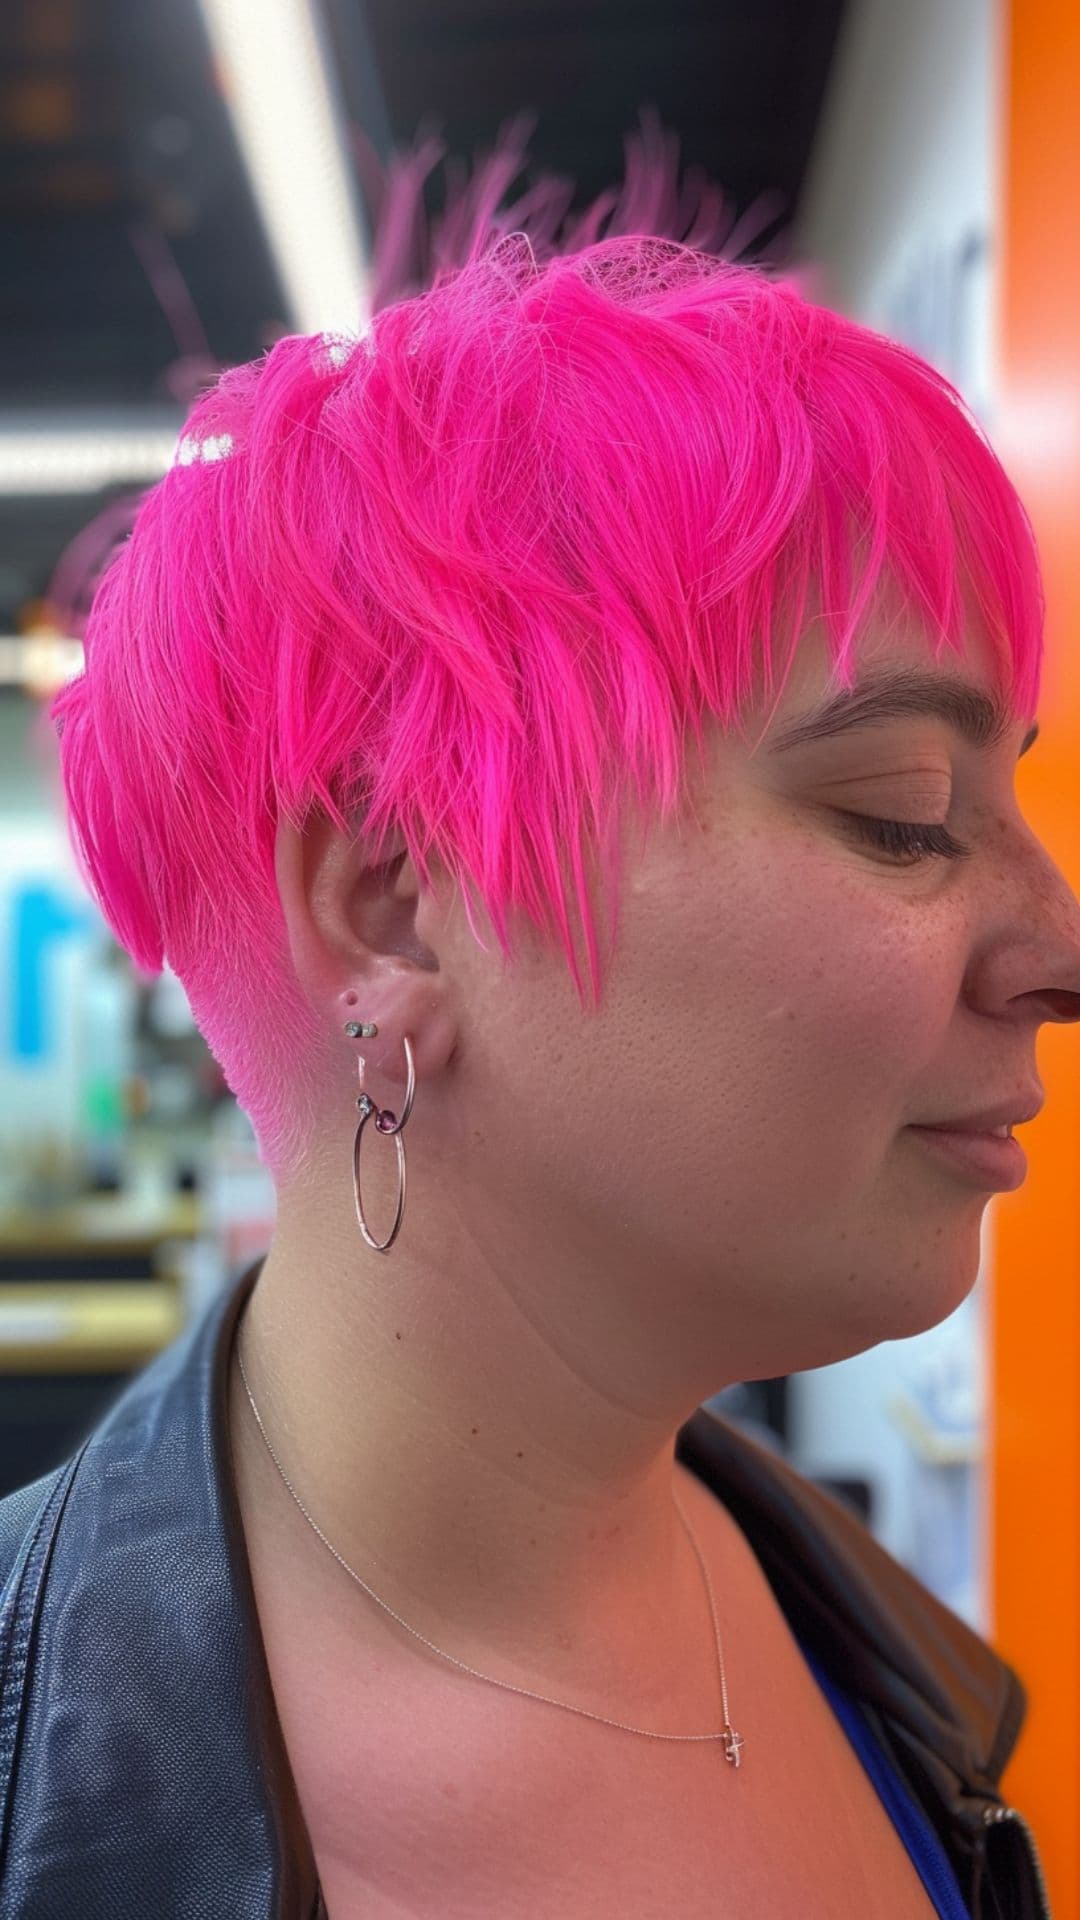 A woman modelling a neon pink pixie cut.